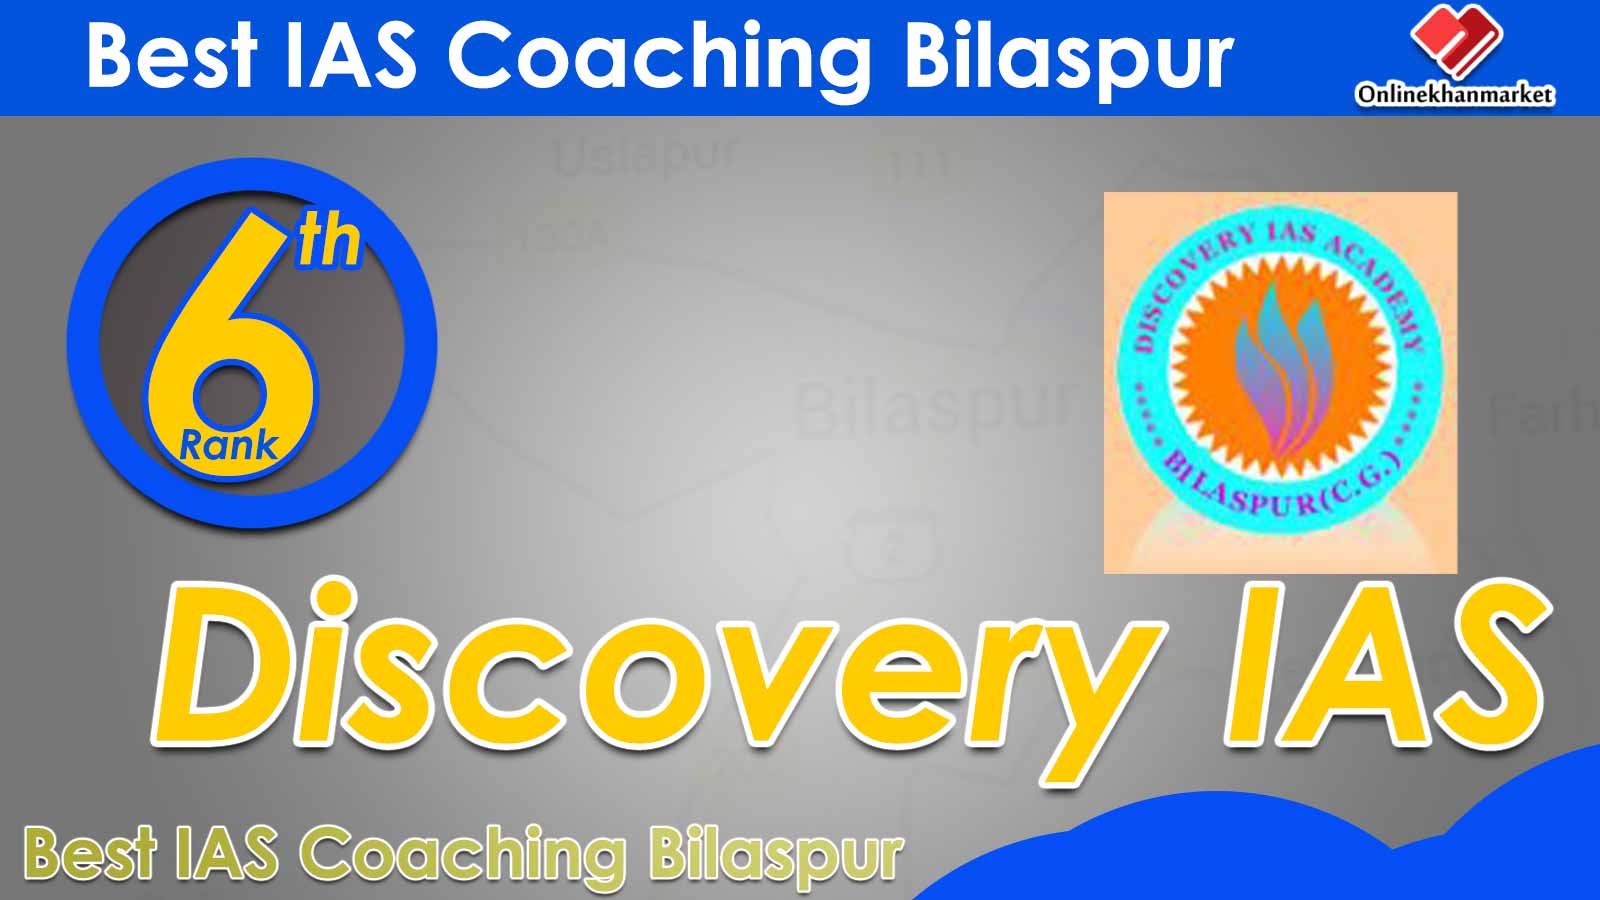 Best IAS Coaching in Bilaspur